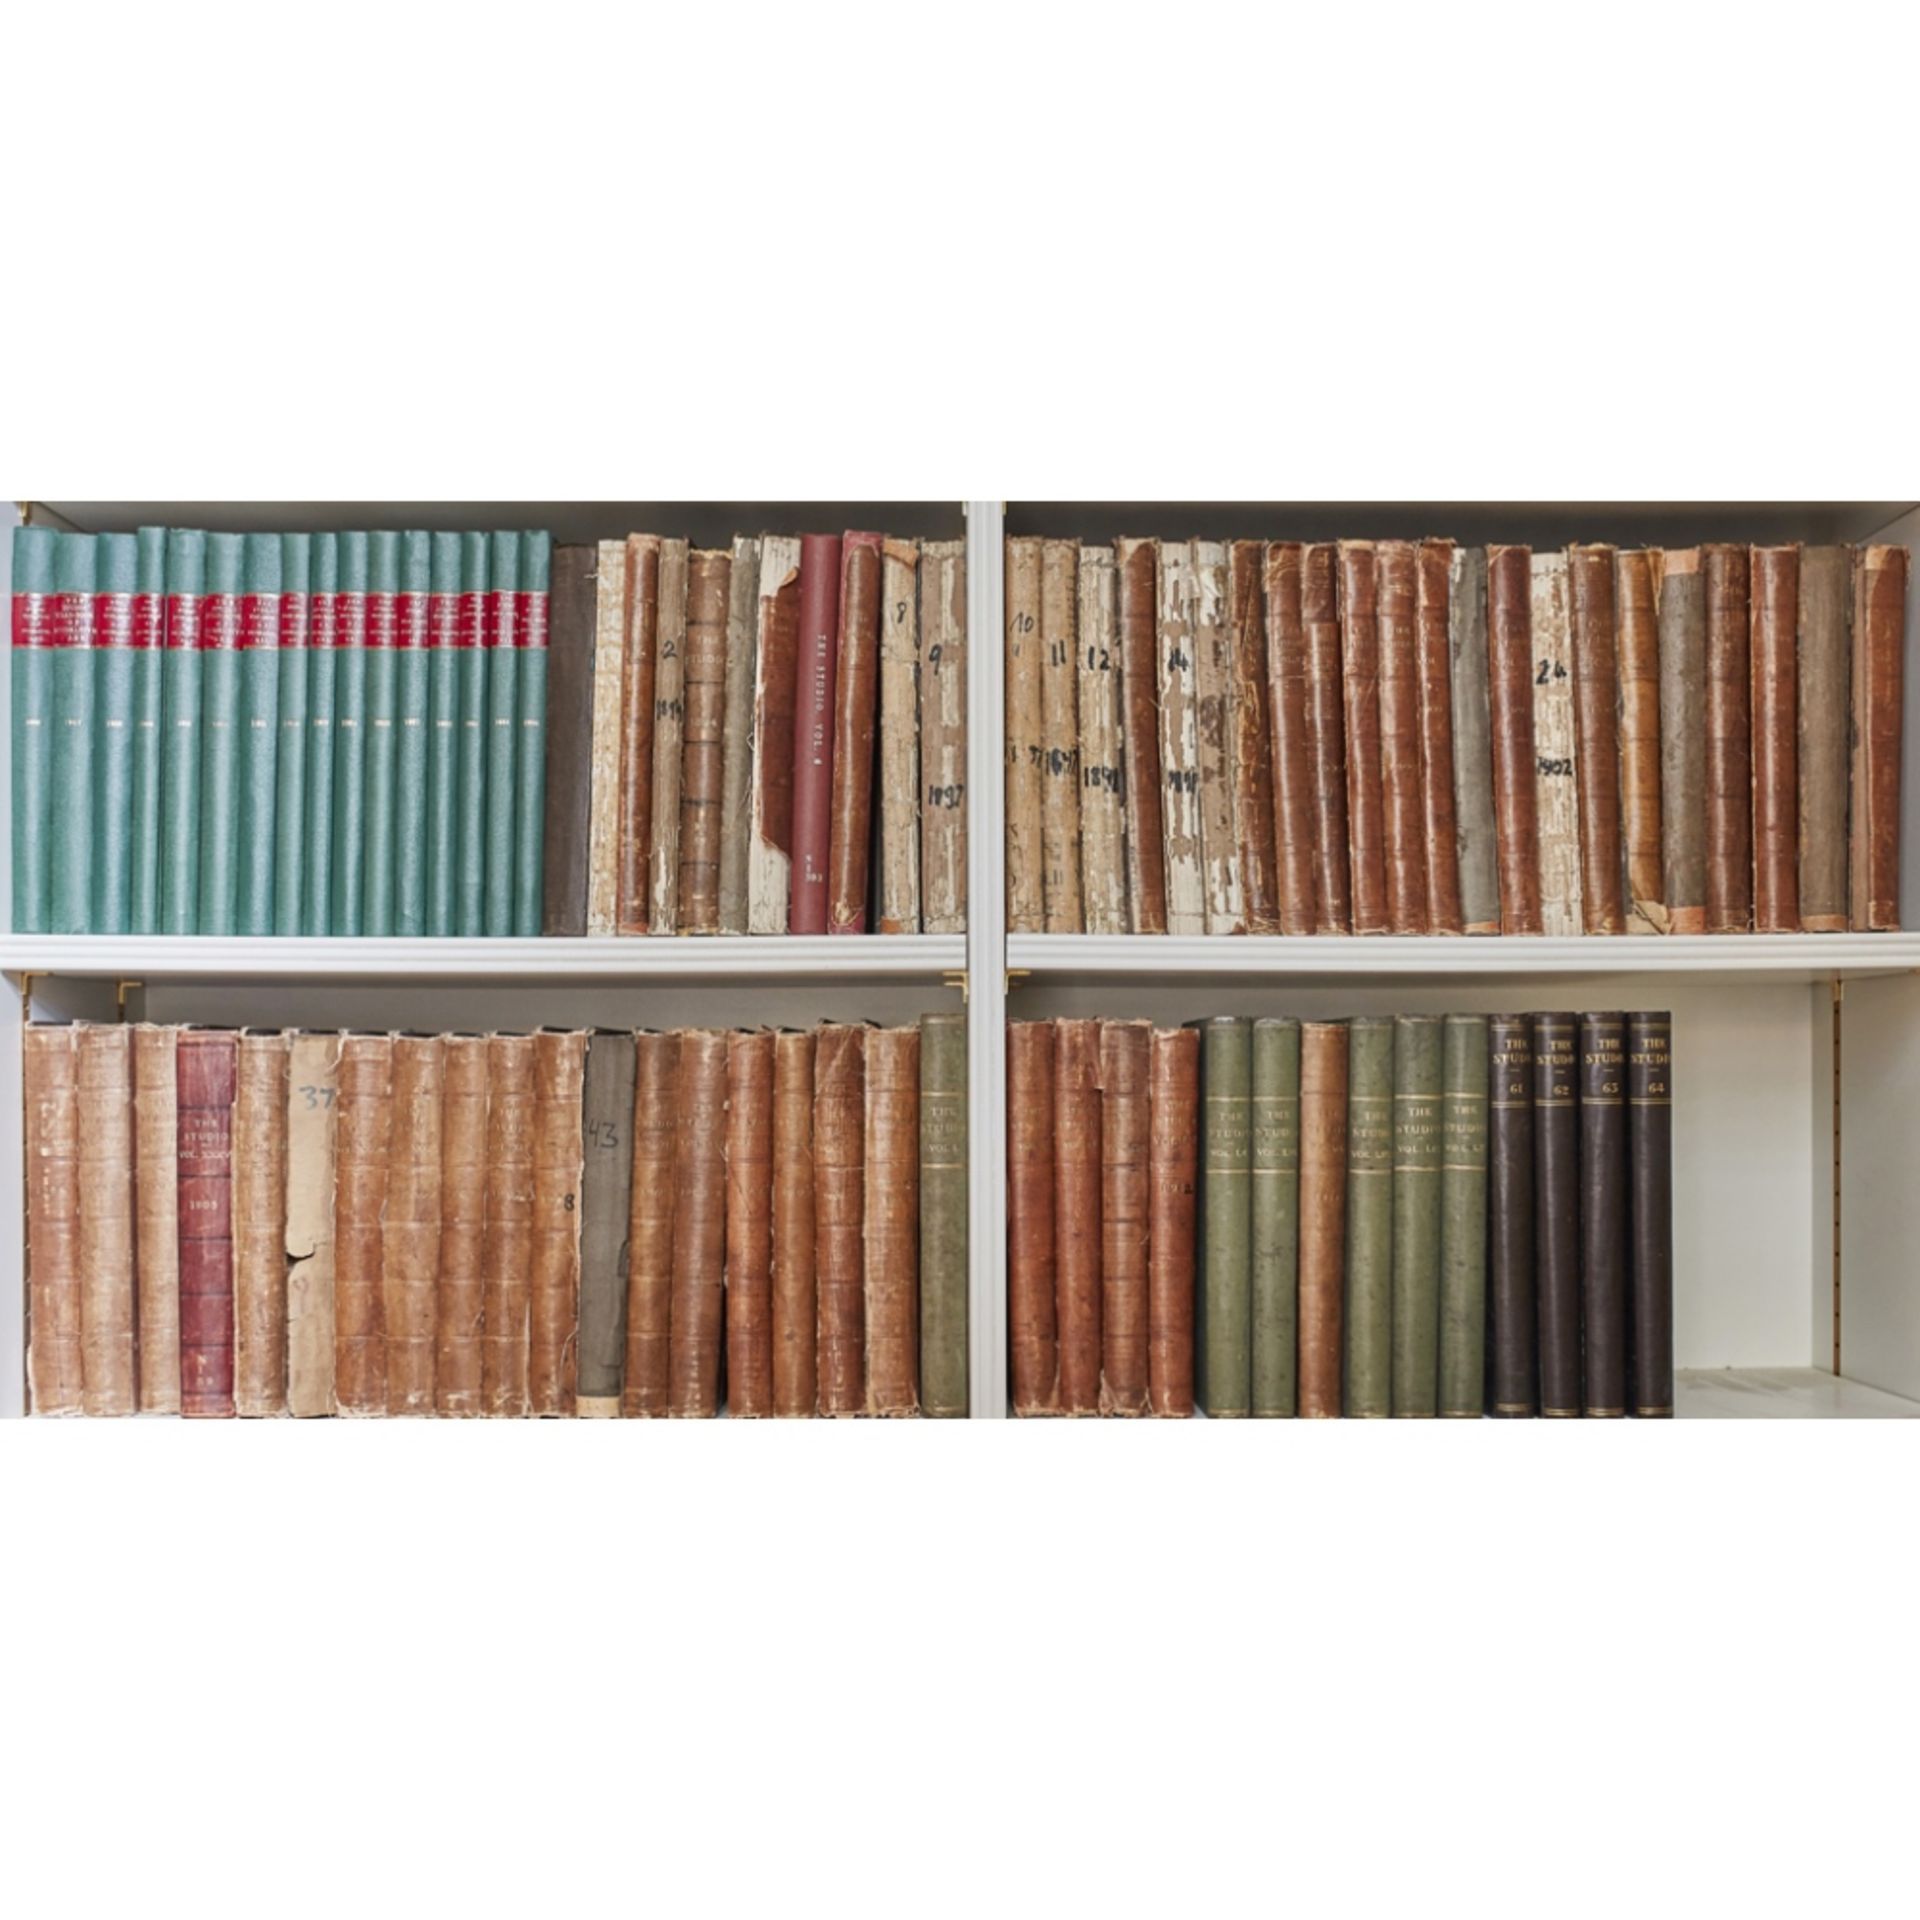 THE STUDIO MAGAZINE LONDON: STUDIO XVI, 1893-1915. VOLUMES 1-64 4to, various bindings, worn; and - Image 2 of 2